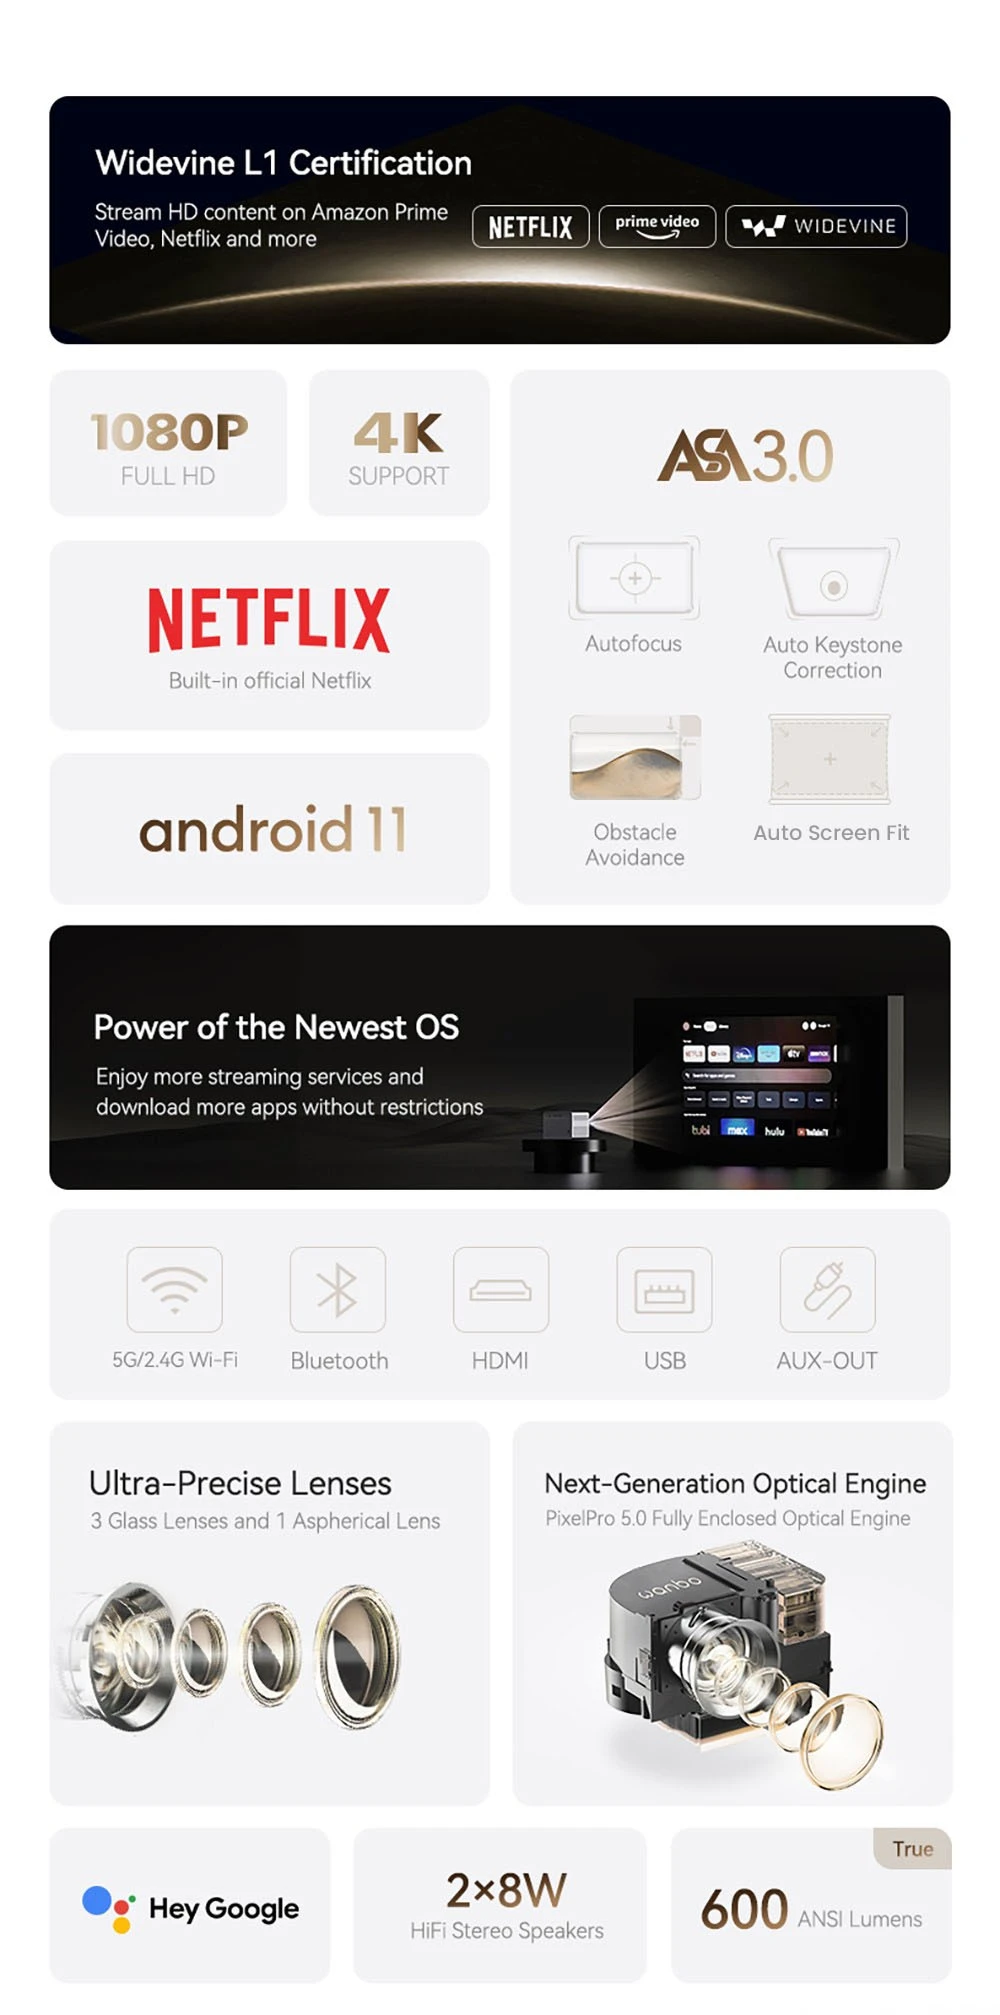 [Netflix Certified] WANBO DaVinci 1 Pro Projector, Android 11, 600 ANSI Lumens, Native 1080P, , 5G WiFi Blueroorh,  Auto-Focus/Auto Keystone Correction/Auto Screen Fit/Obstacle Avoidance